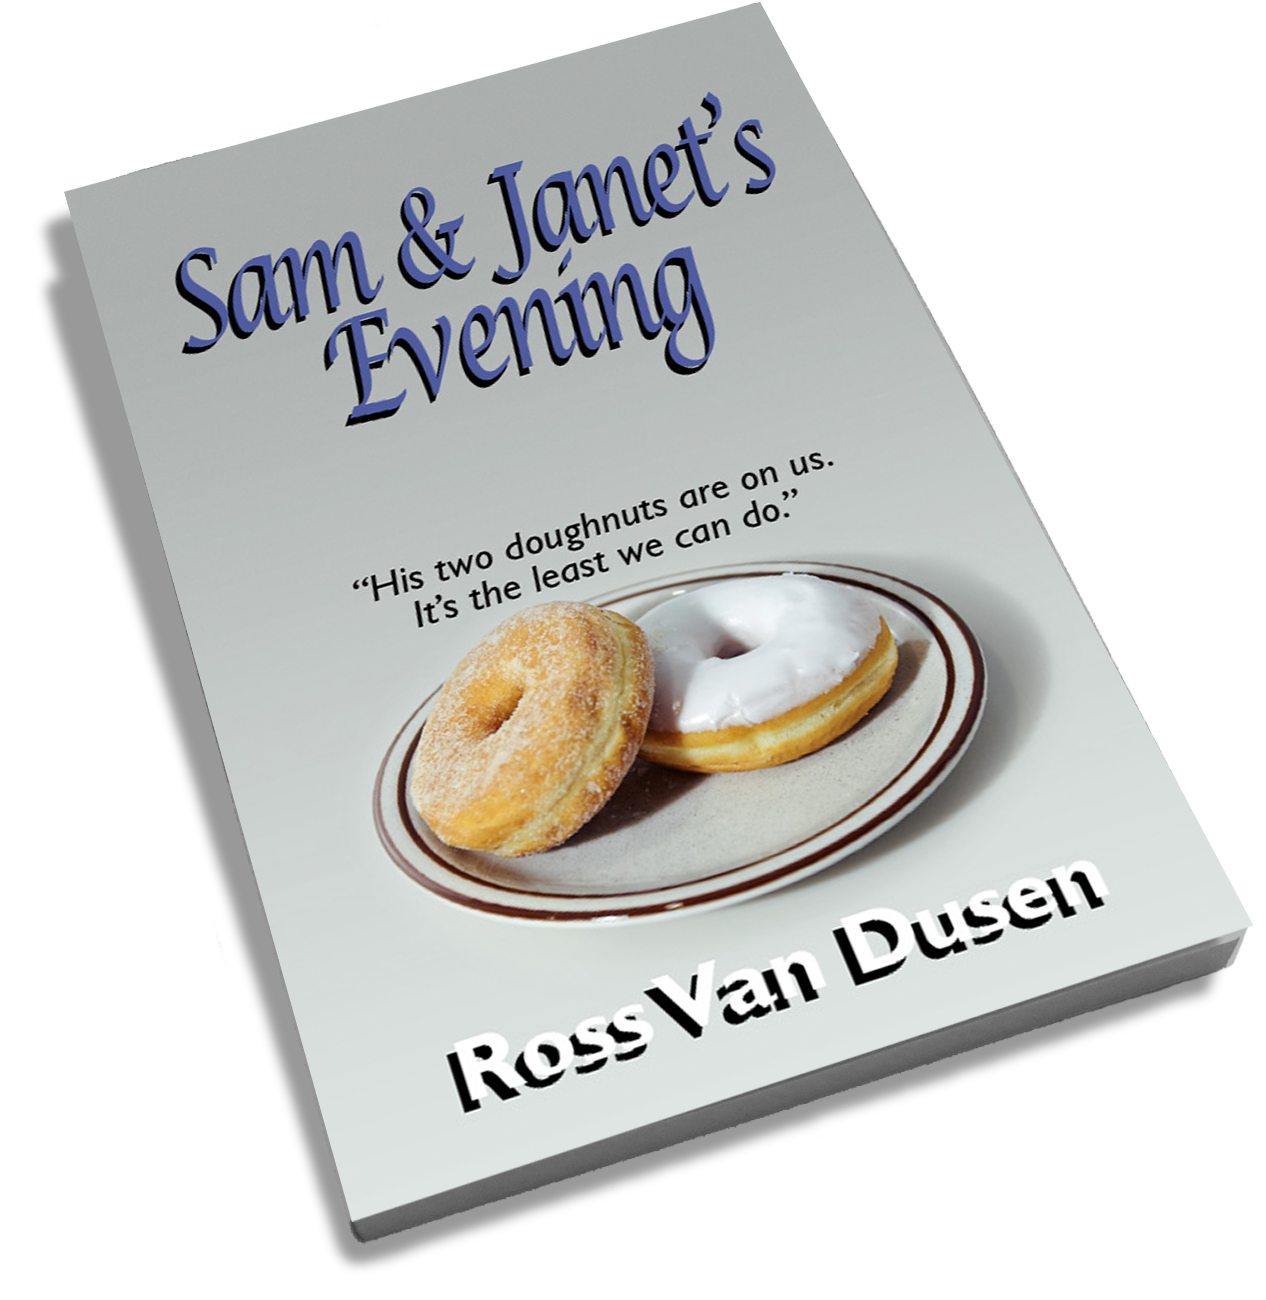 Sam & Janet’s Evening book